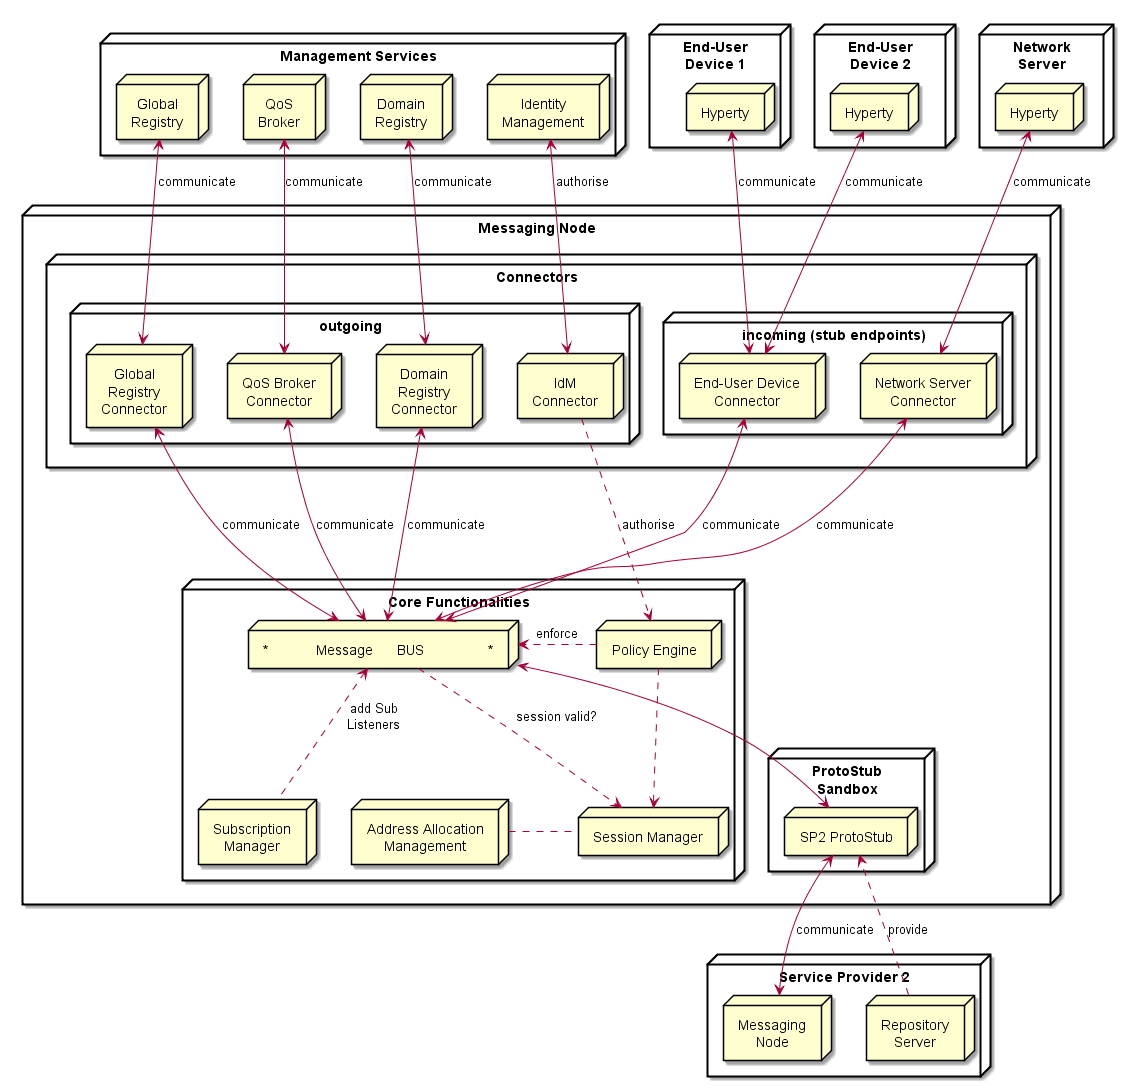 Figure @msg-node-architecture-messaging-node-architecture: Messaging Node Architecture